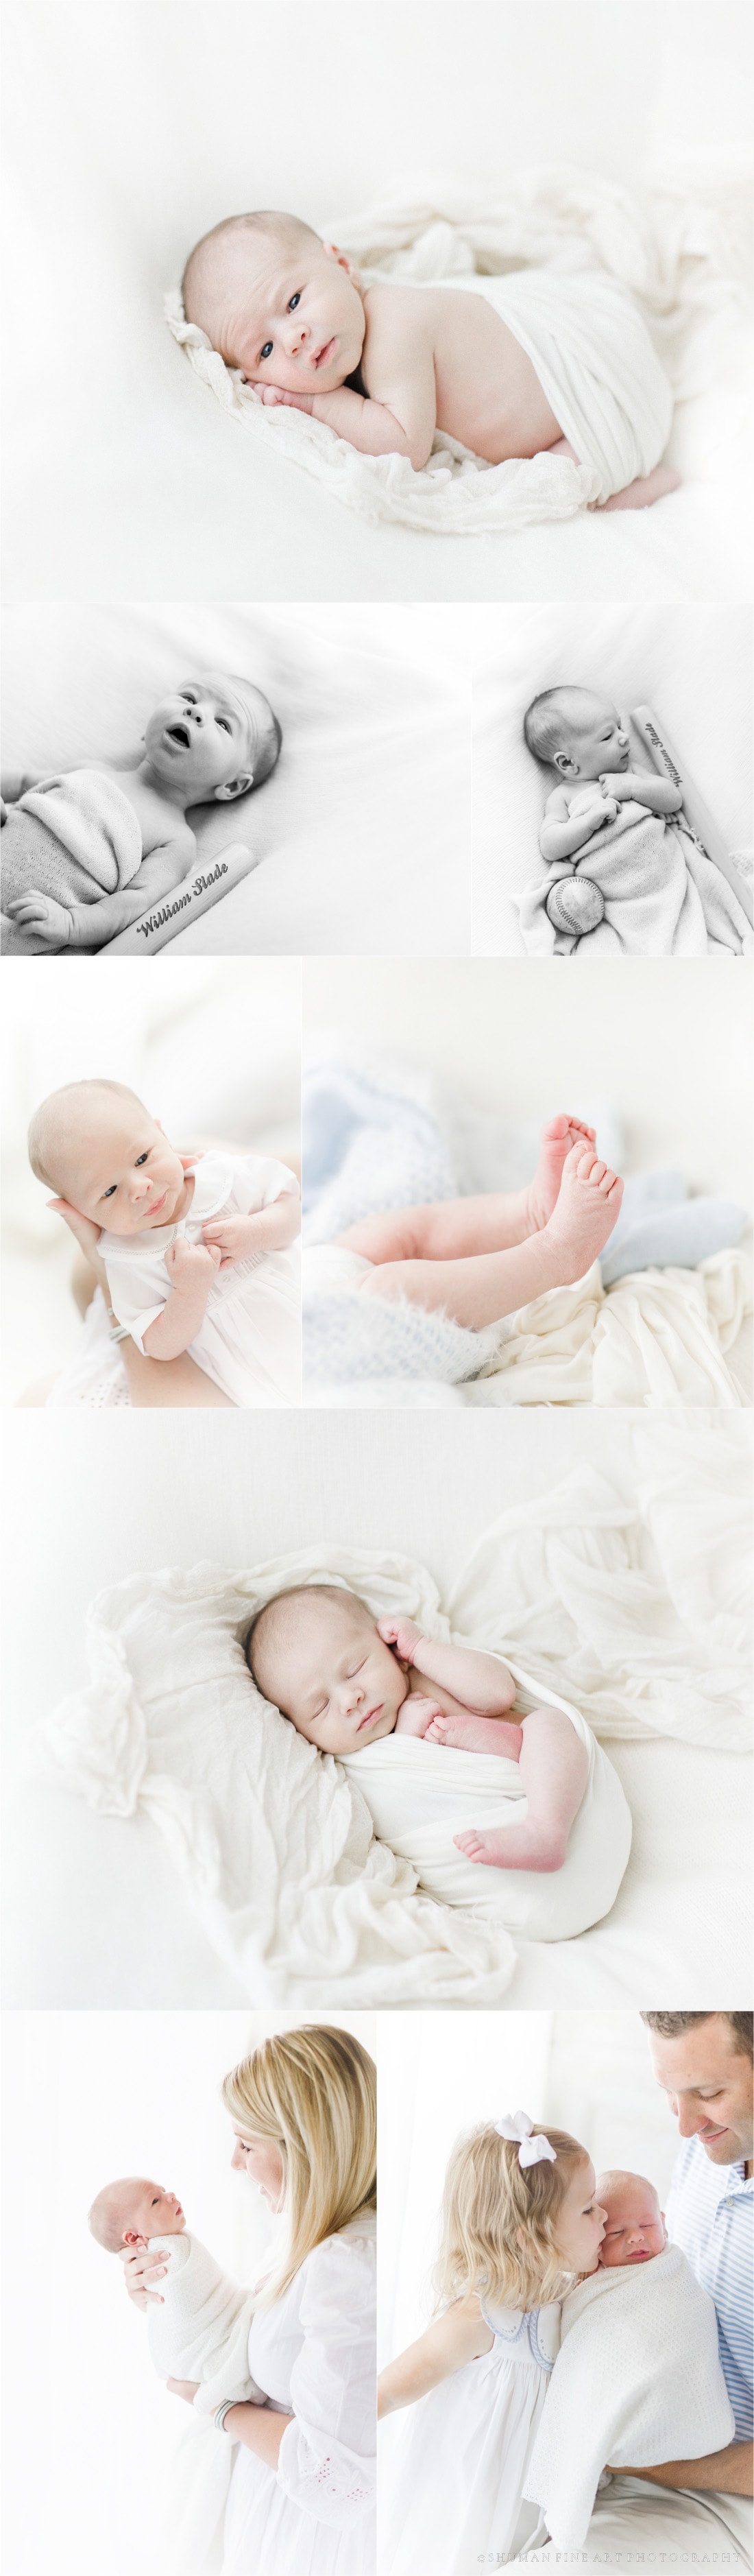 Newborn baby boy portraits in savannah, ga 